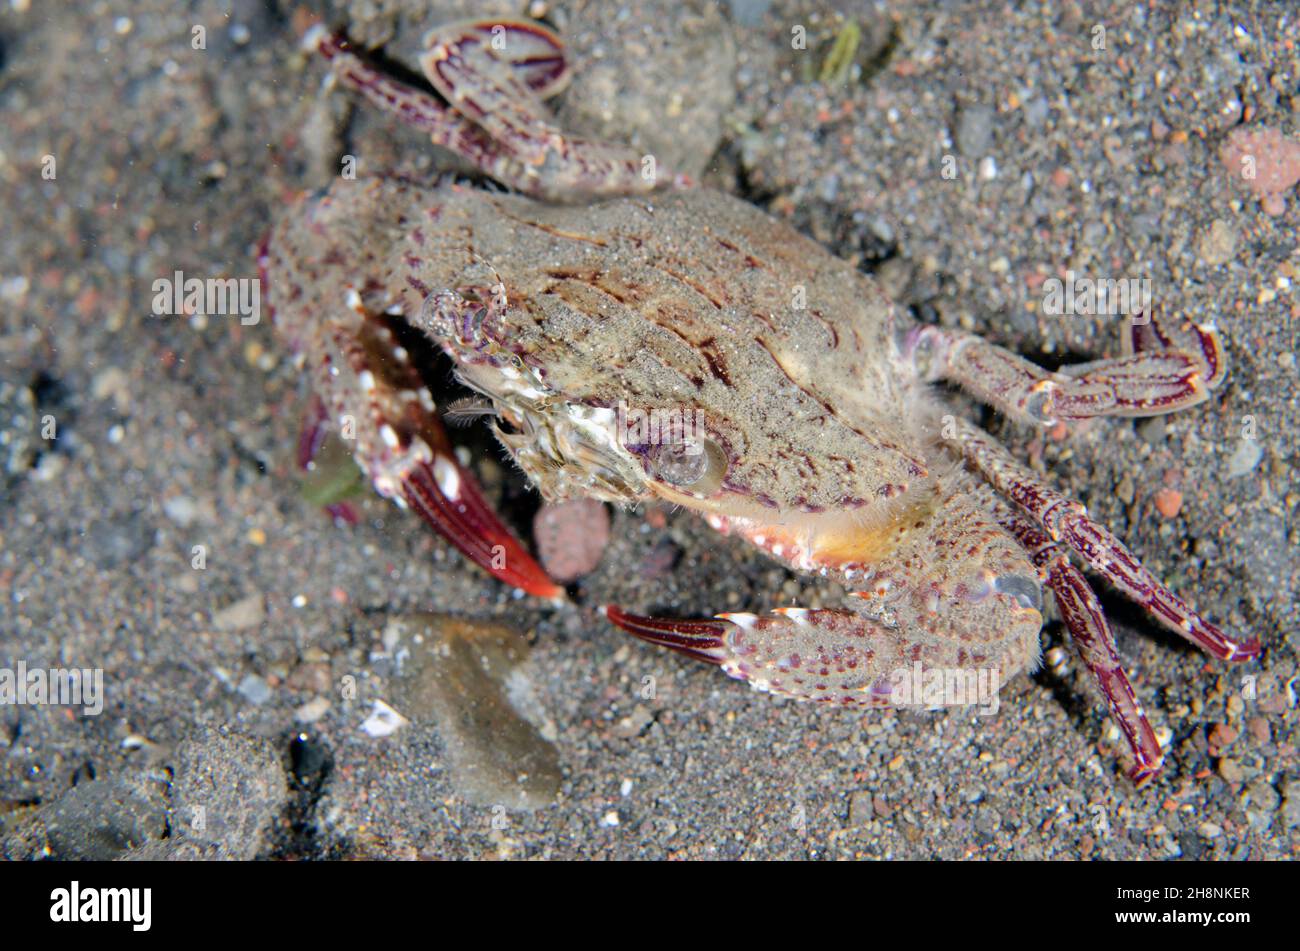 Swimming Crab, Portunidae Family, night dive, Melasti dive site, Amed, Karangasem Regency, Bali, Indonesia, Indian Ocean Stock Photo